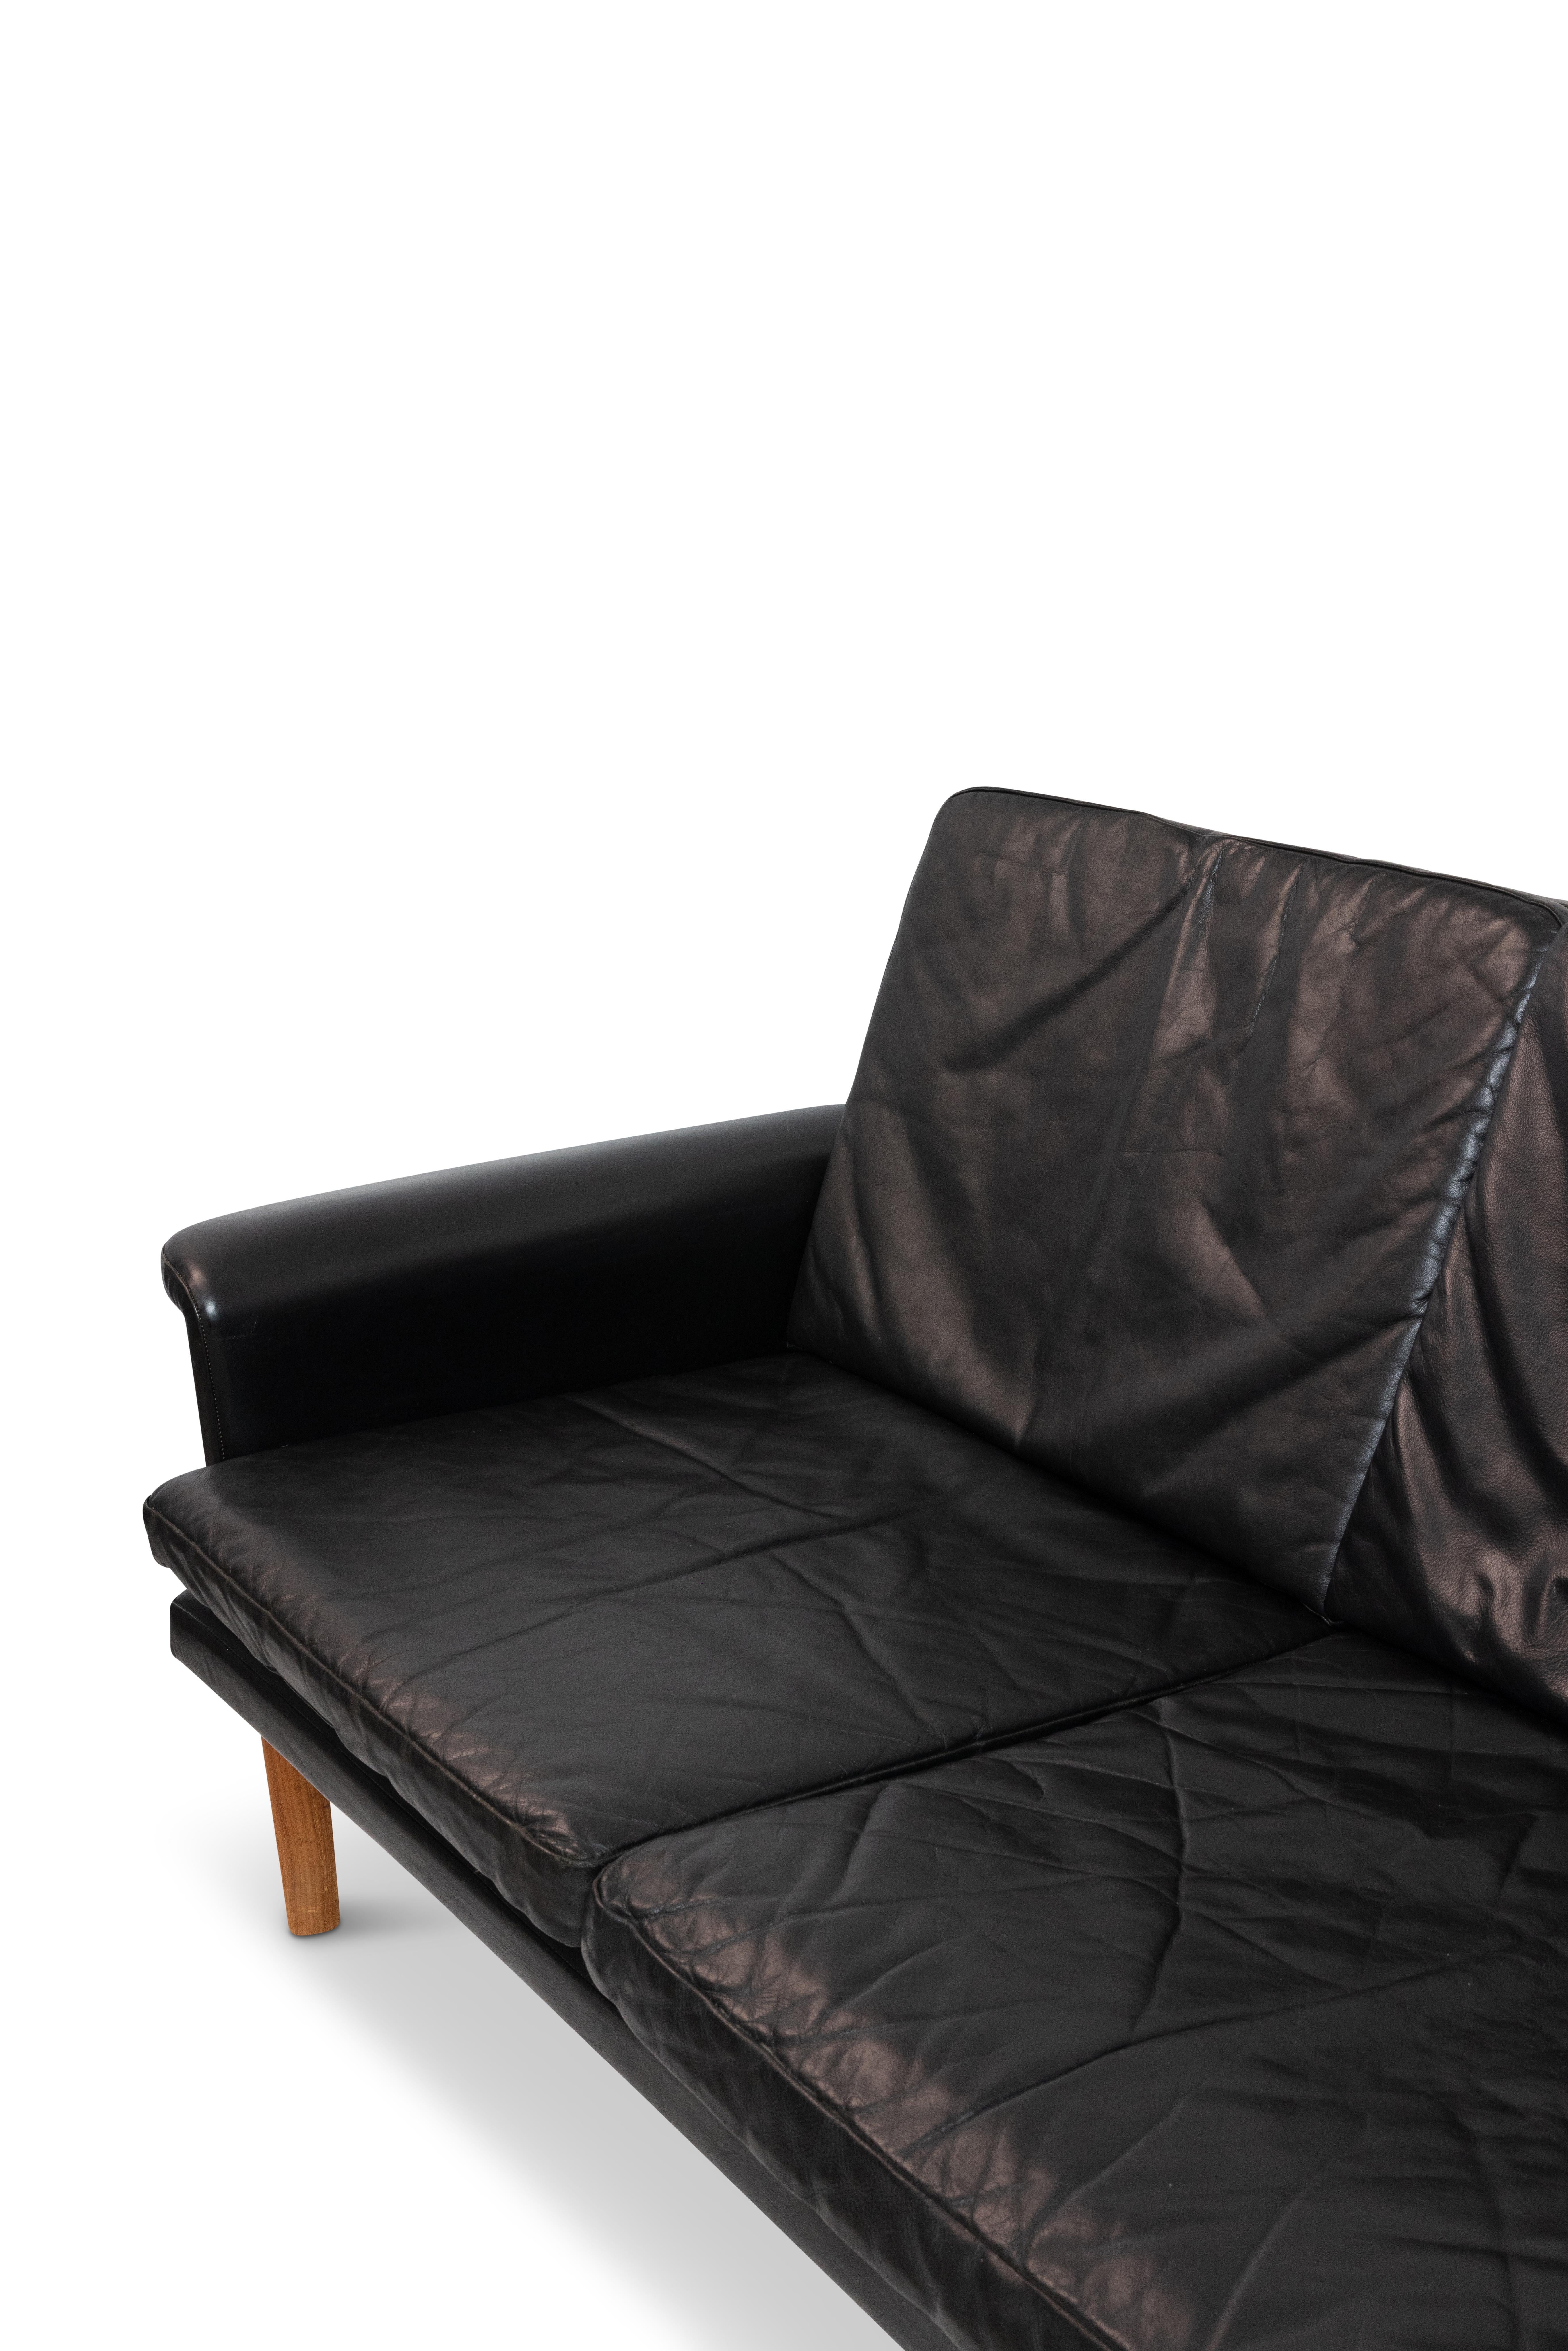 Finn Juhl Three Seat Sofa with Original Black Leather, Model 218/3, Denmark For Sale 3